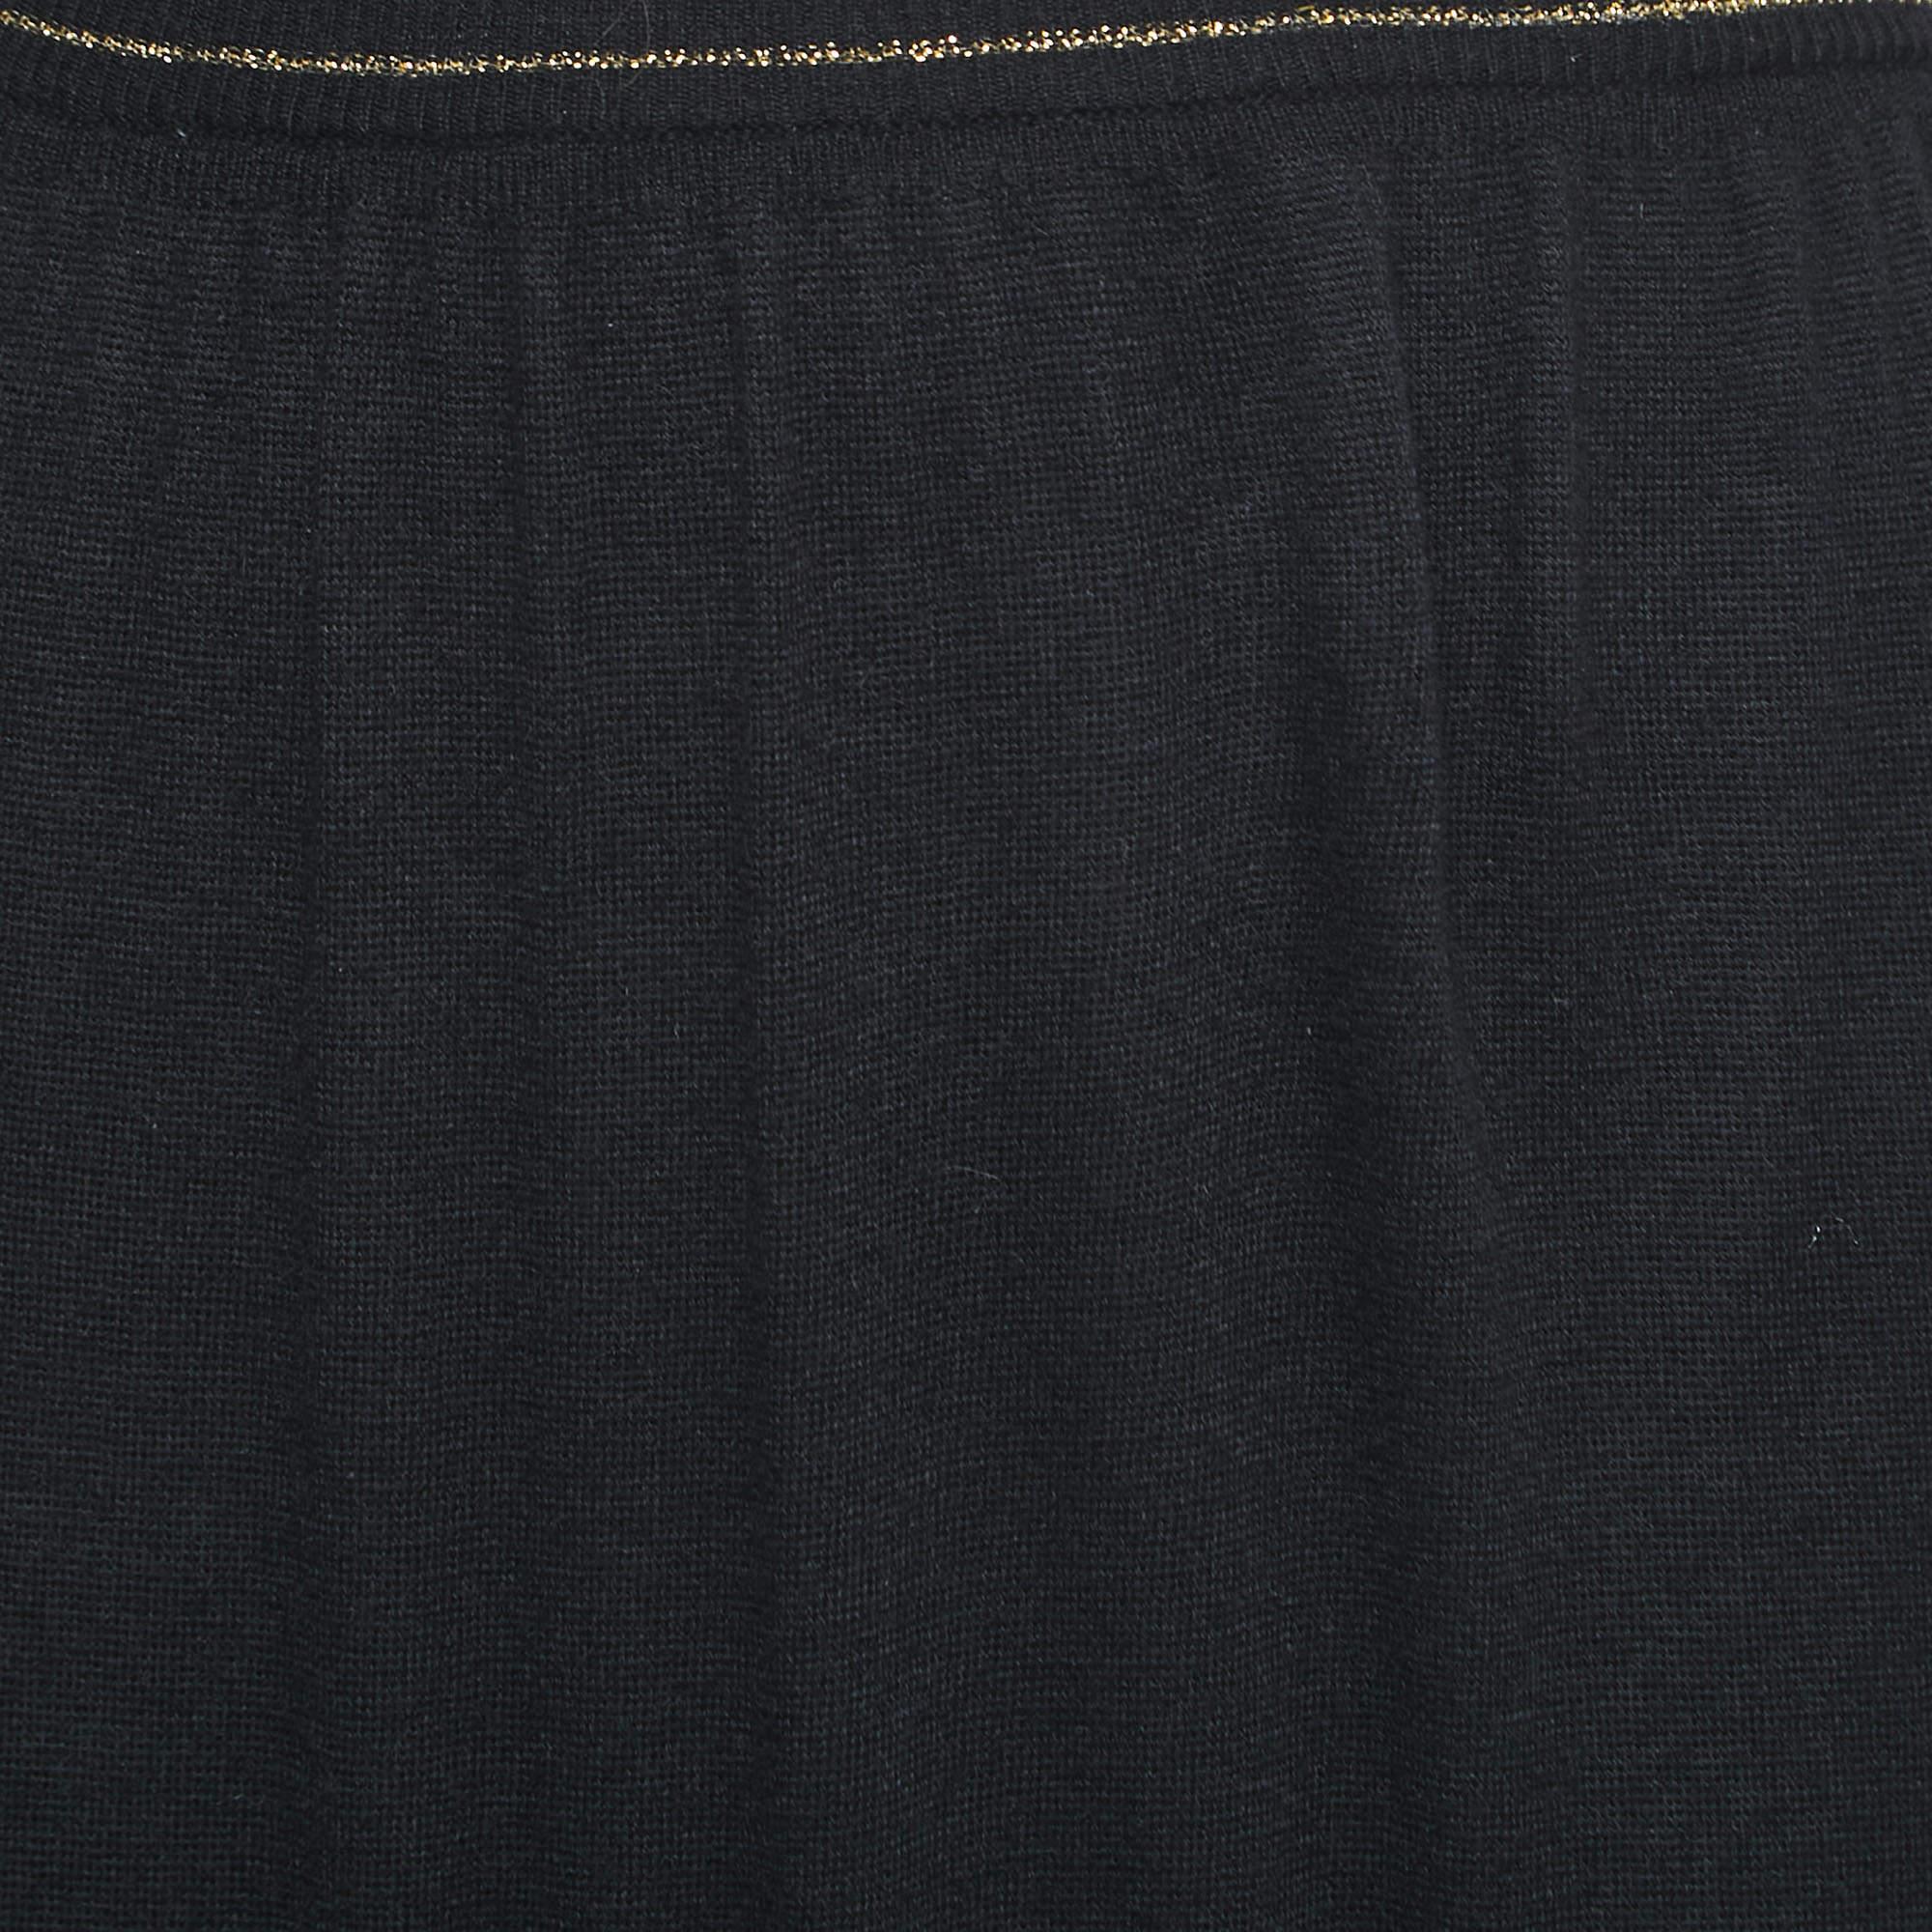 Chanel Black Lurex Knit Maxi Skirt M In Good Condition For Sale In Dubai, Al Qouz 2